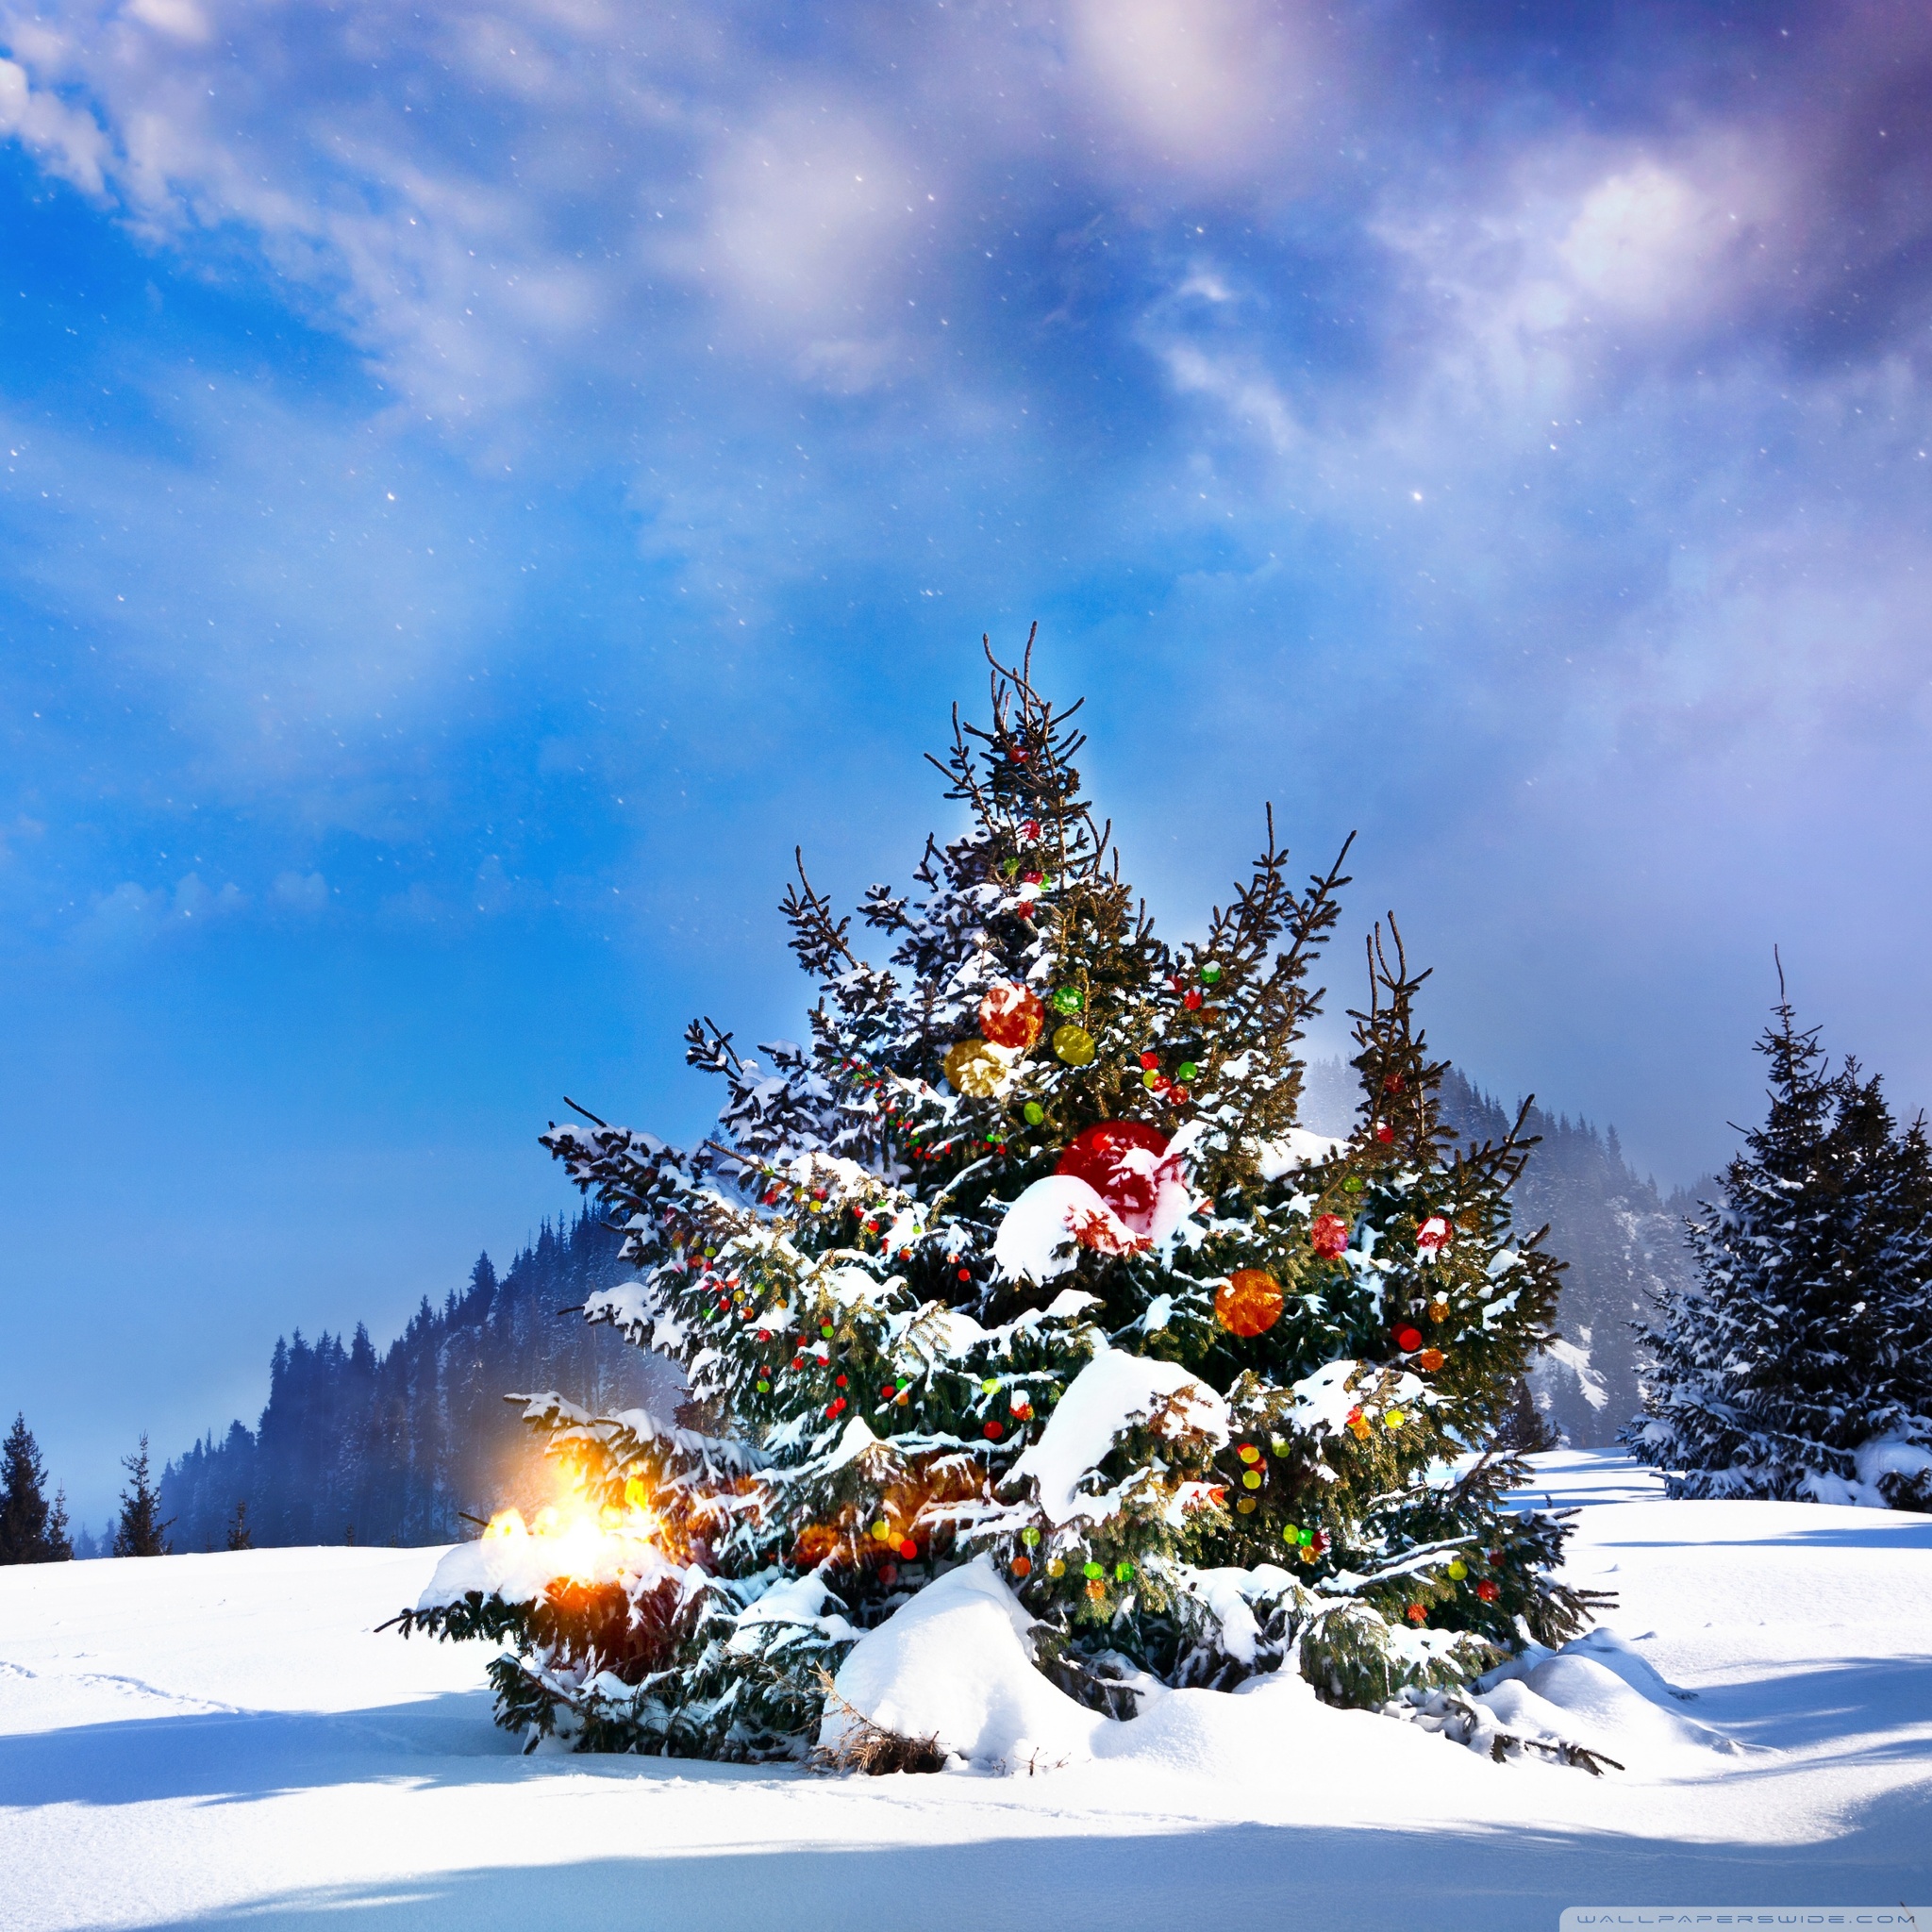 Christmas Trees Decorated Outside Ultra HD Desktop Background Wallpaper for 4K UHD TV, Widescreen & UltraWide Desktop & Laptop, Tablet